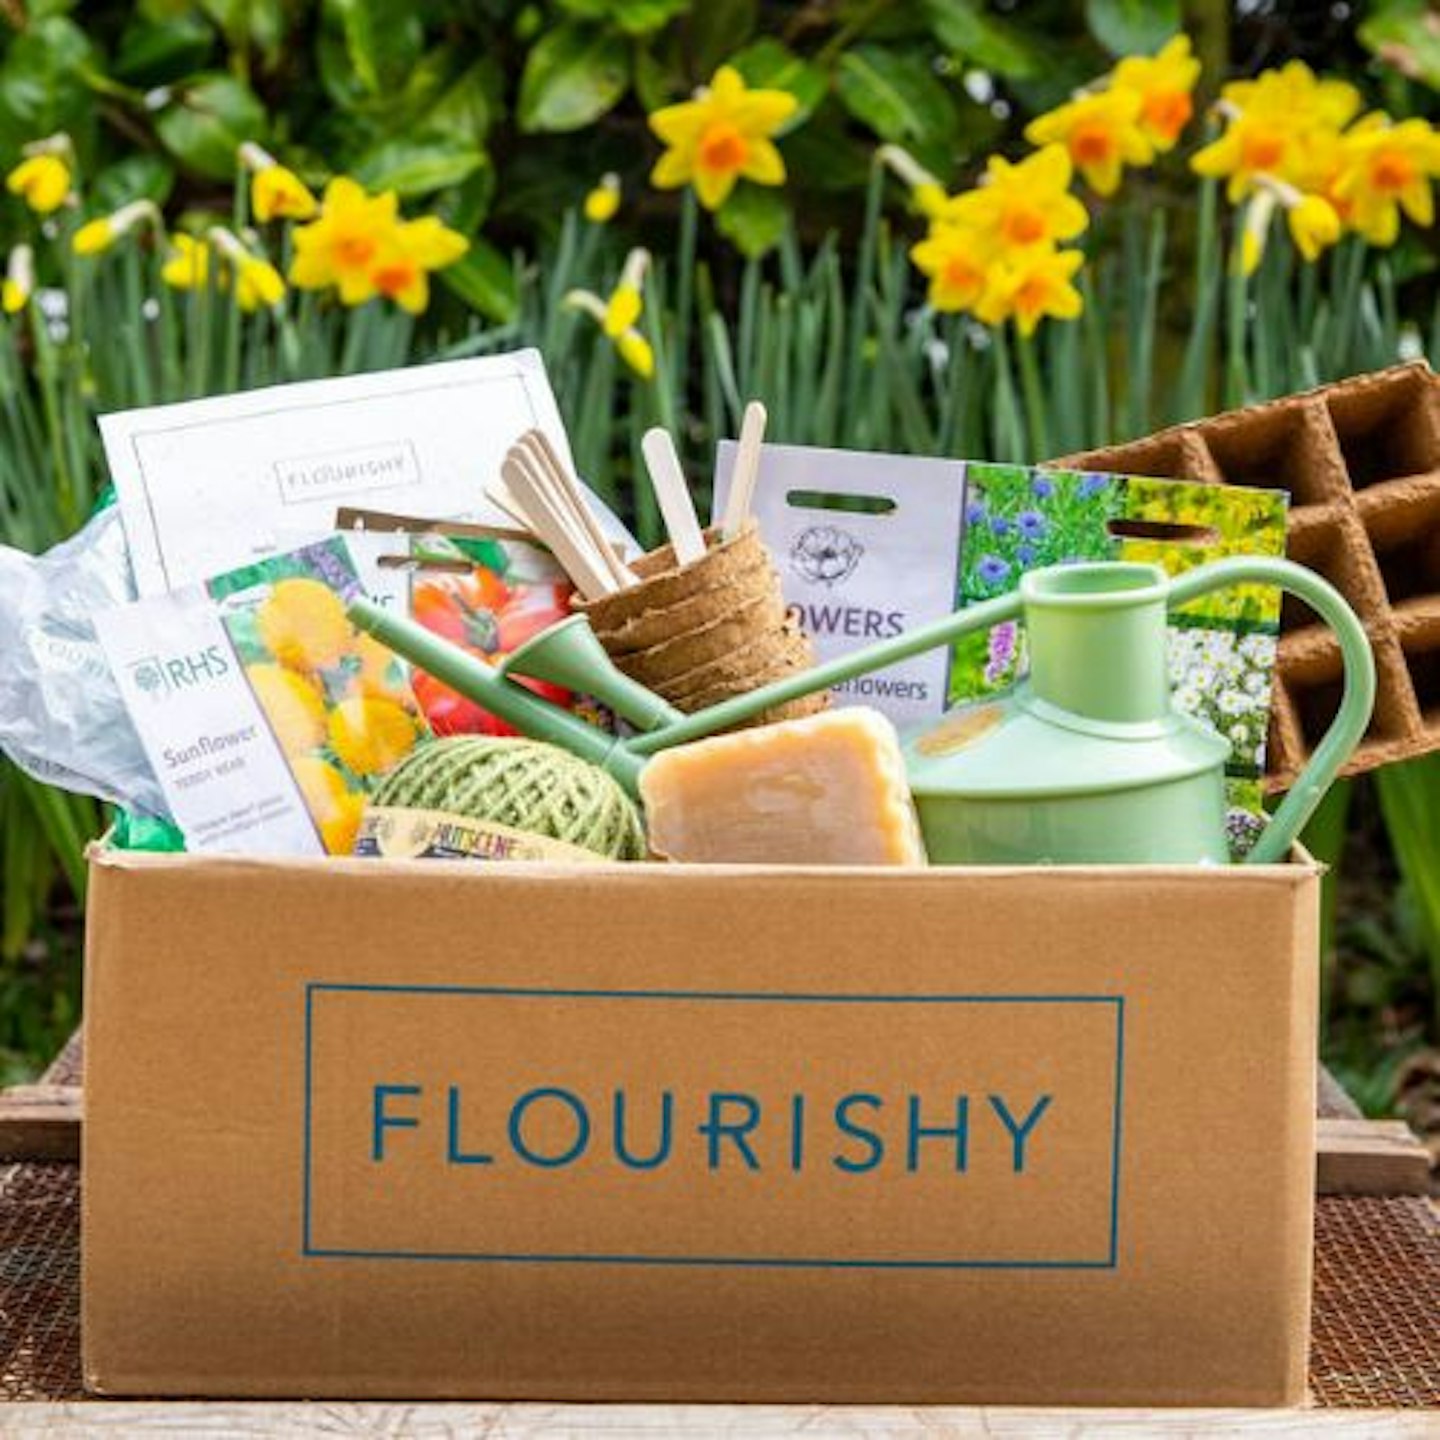 The Flourishy Gardener's Subscription Box